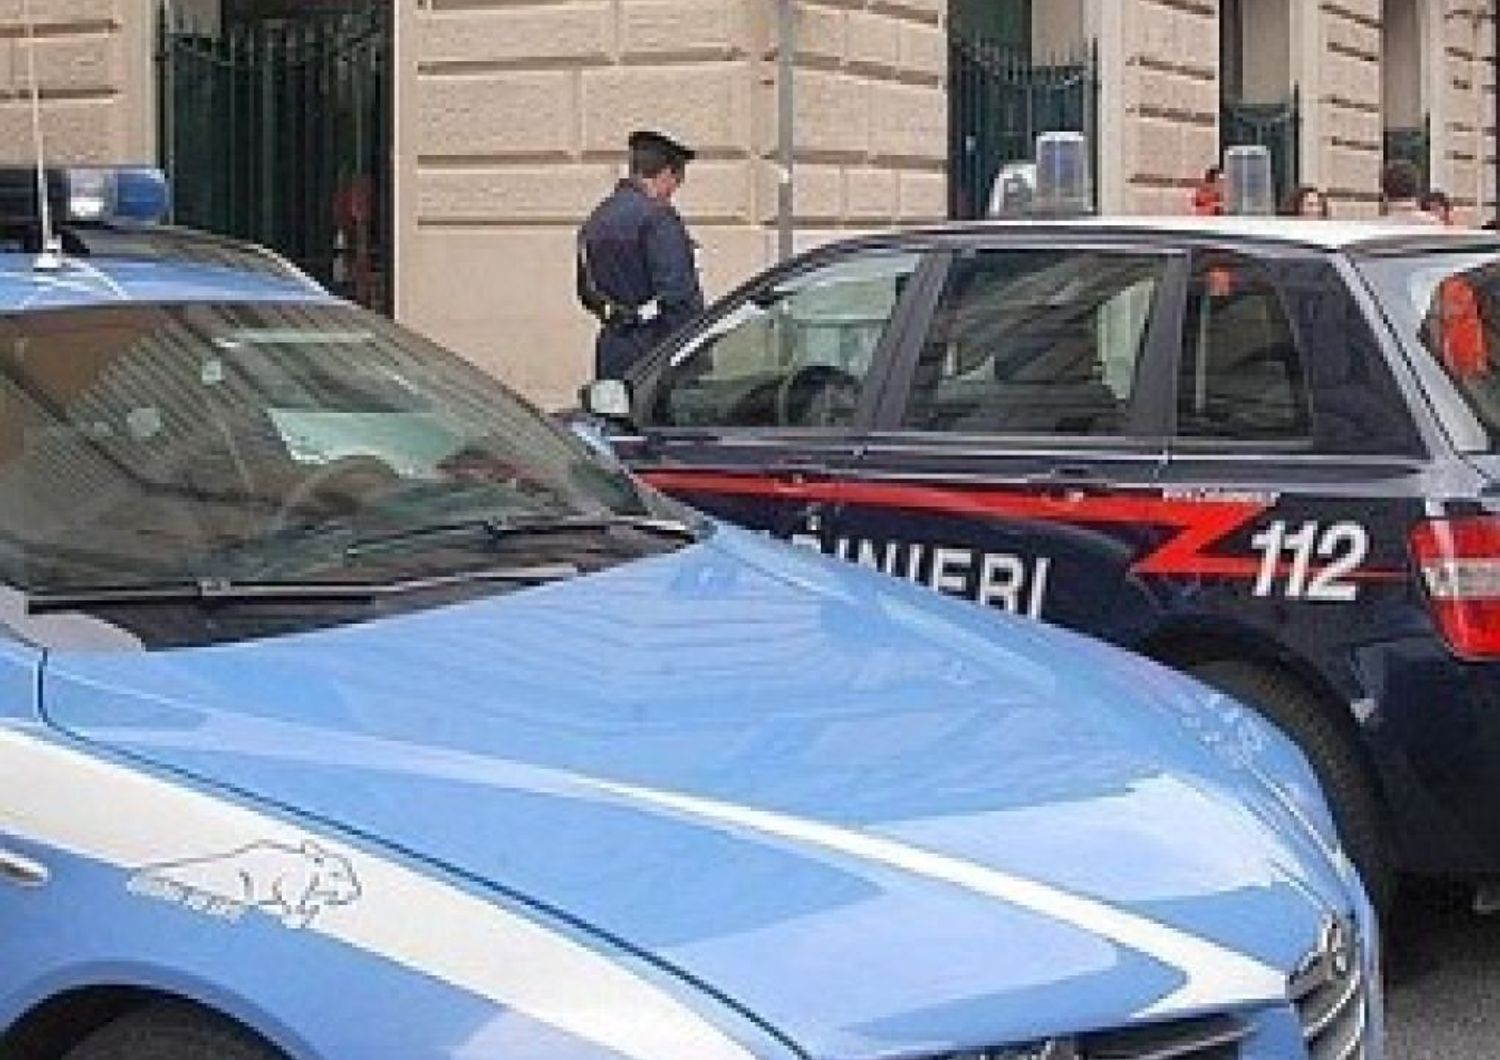 &nbsp;Polizia Carabinieri arresti